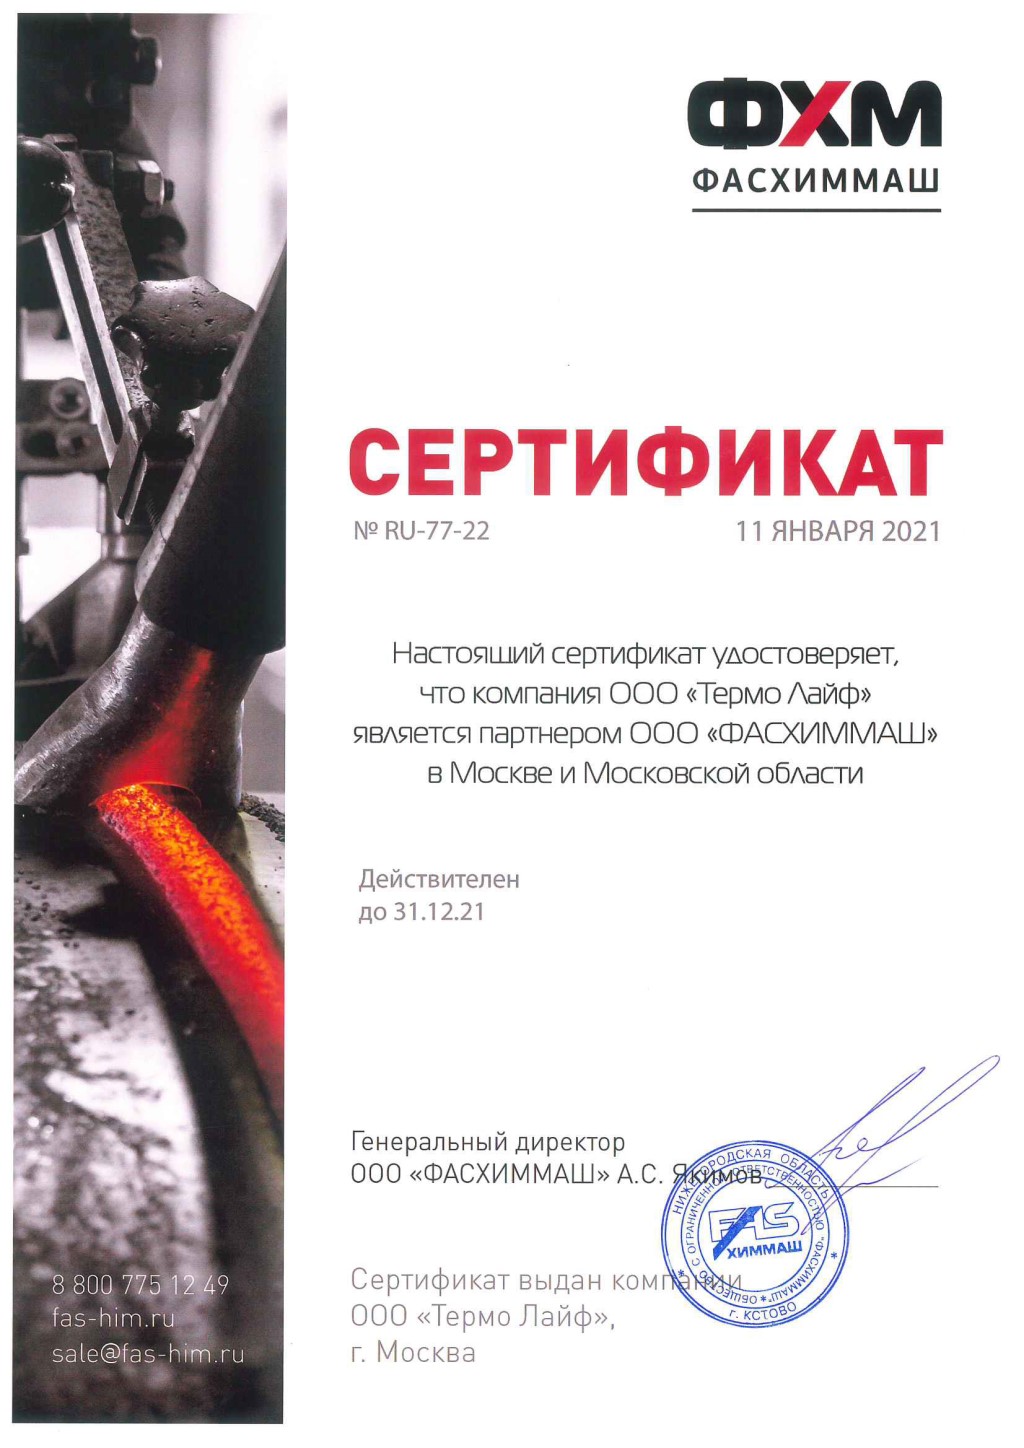 Сертификат ФХМ